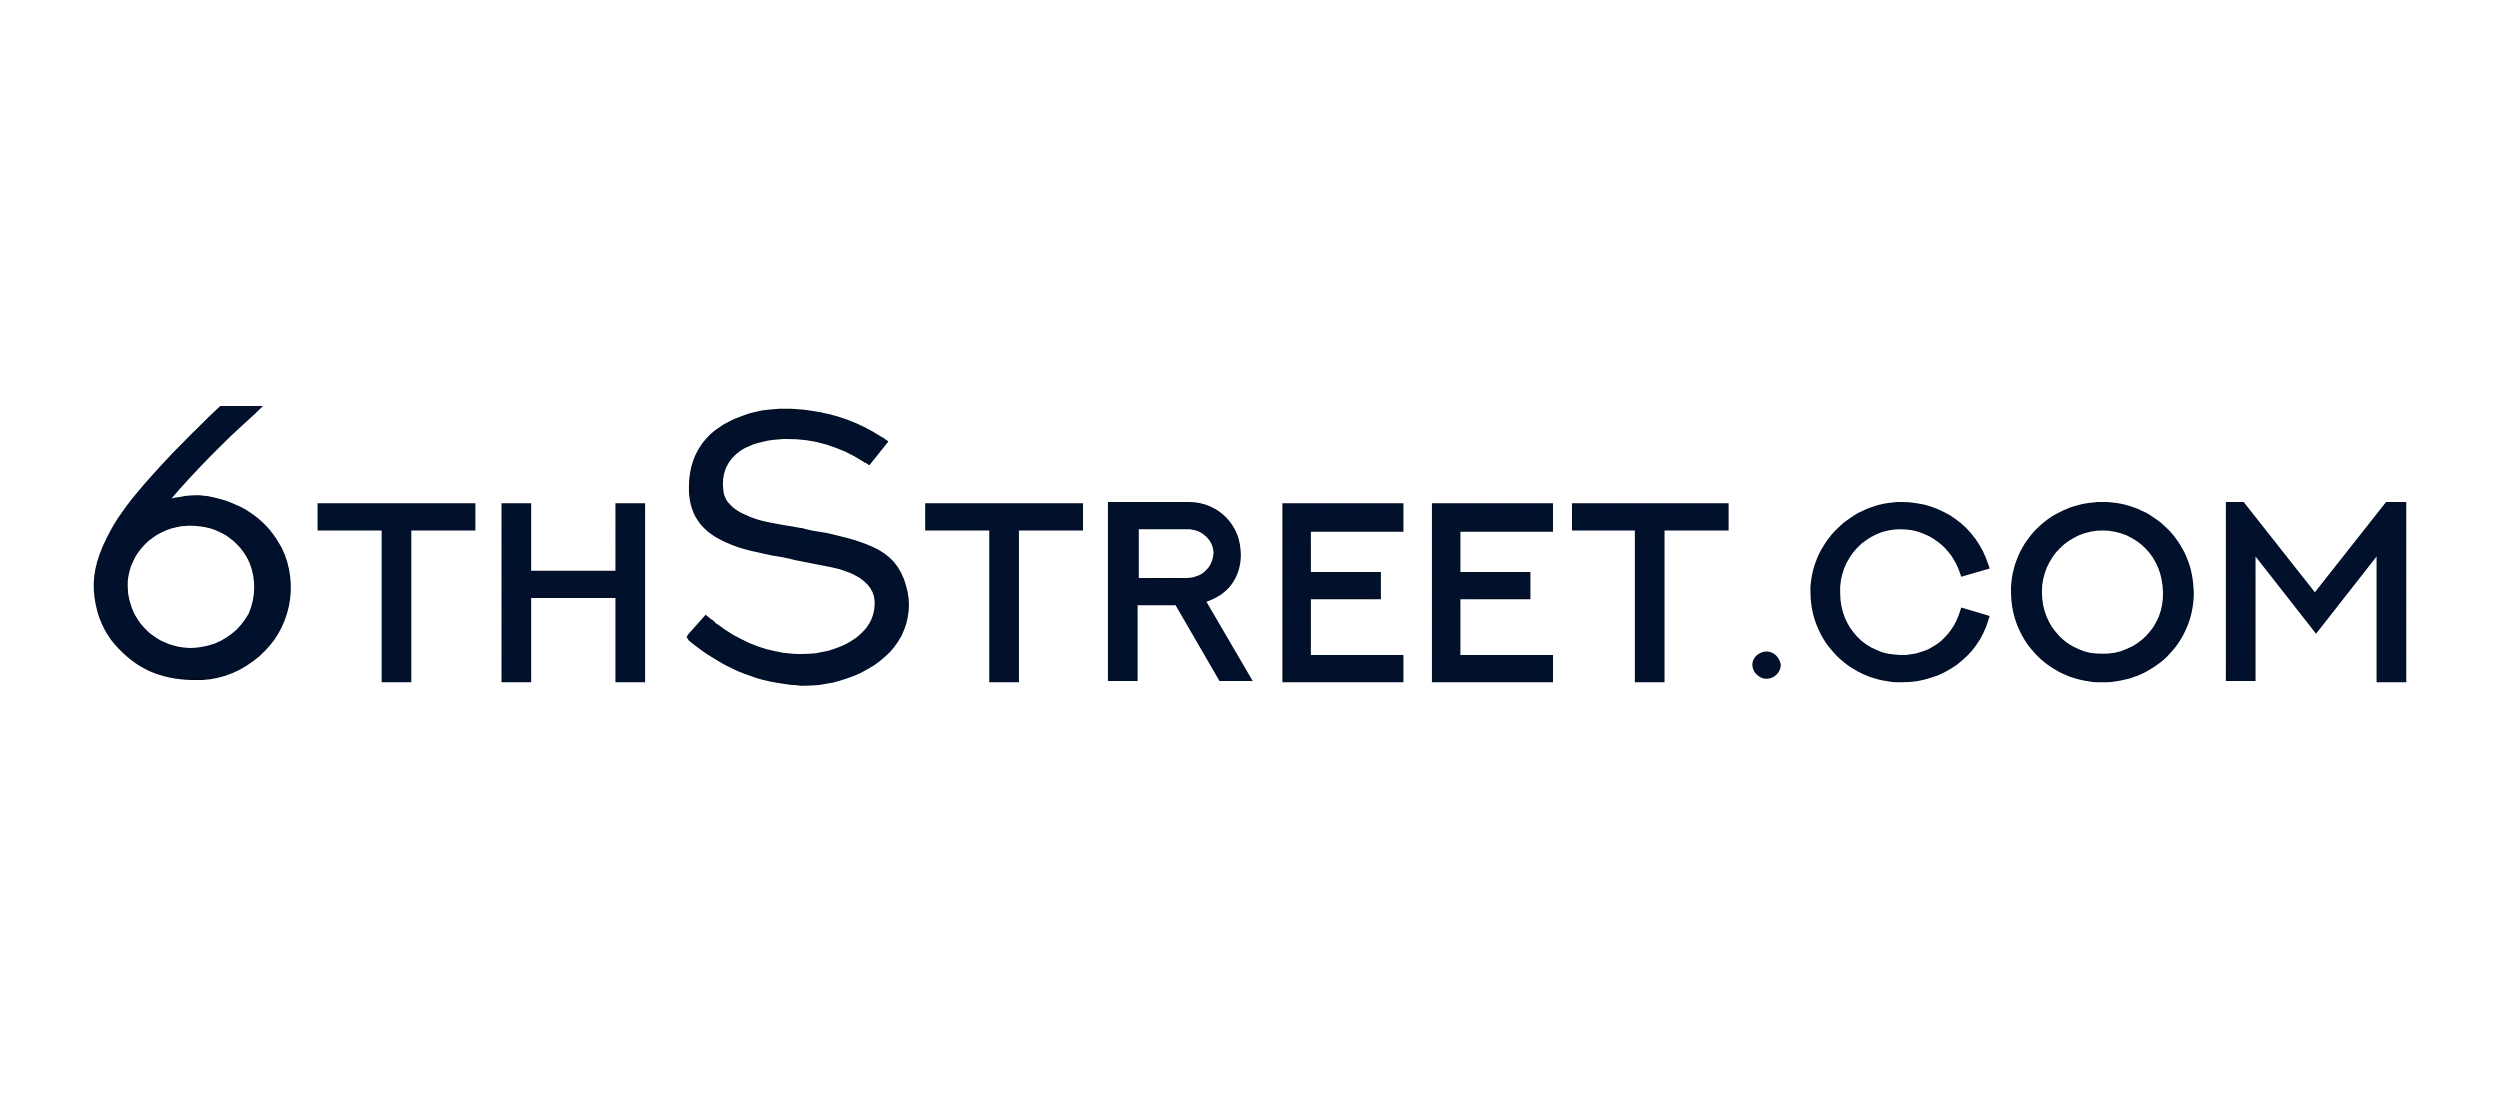 6thstreet.com logo